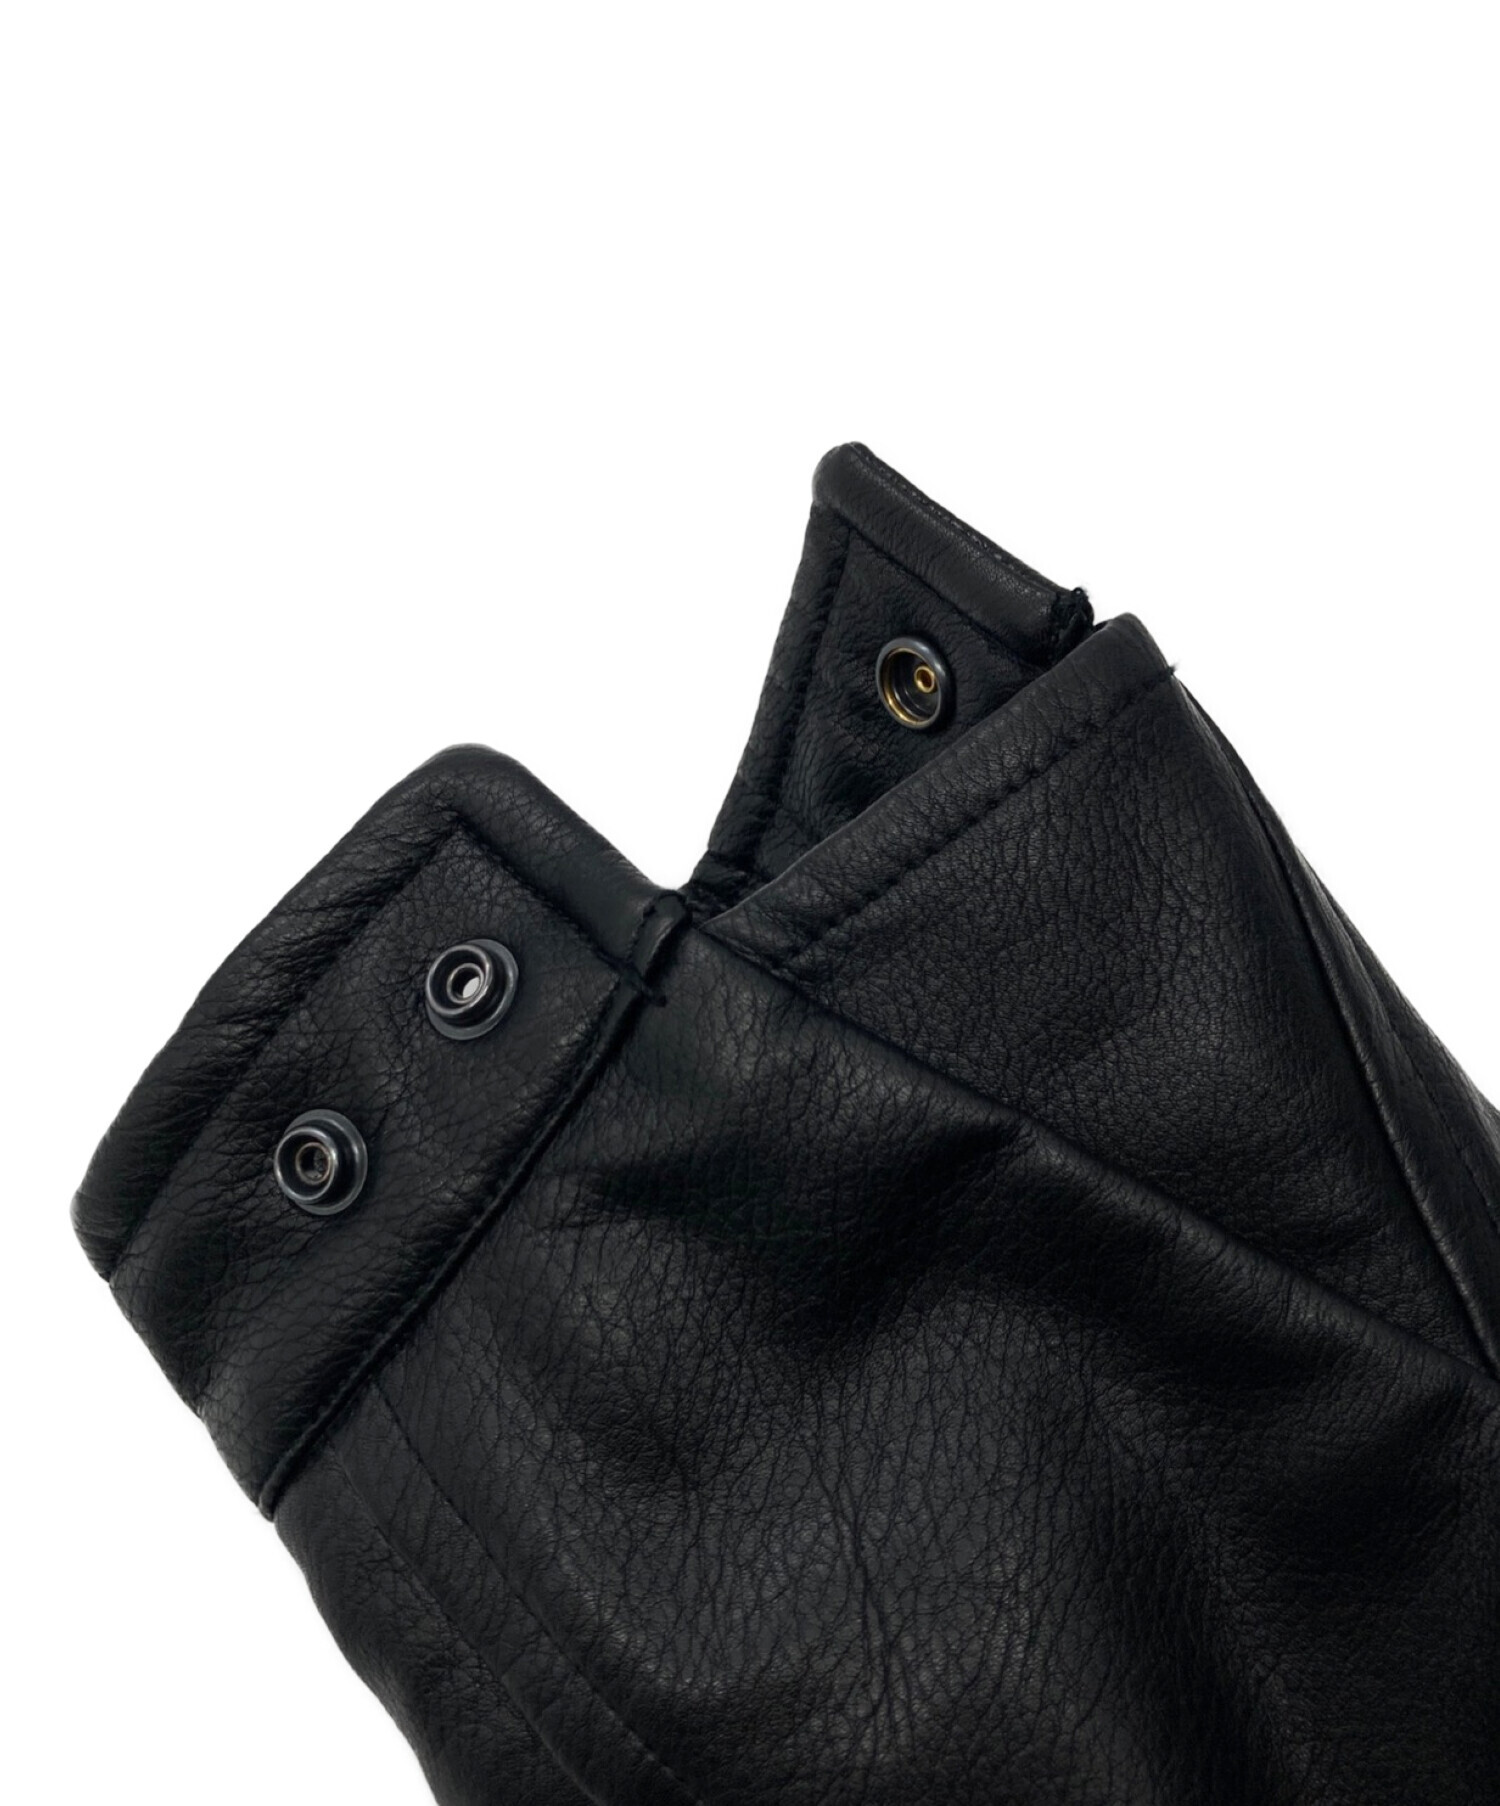 NAUTICA (ノーティカ) Vegan Leather Jacket ブラック サイズ:XL